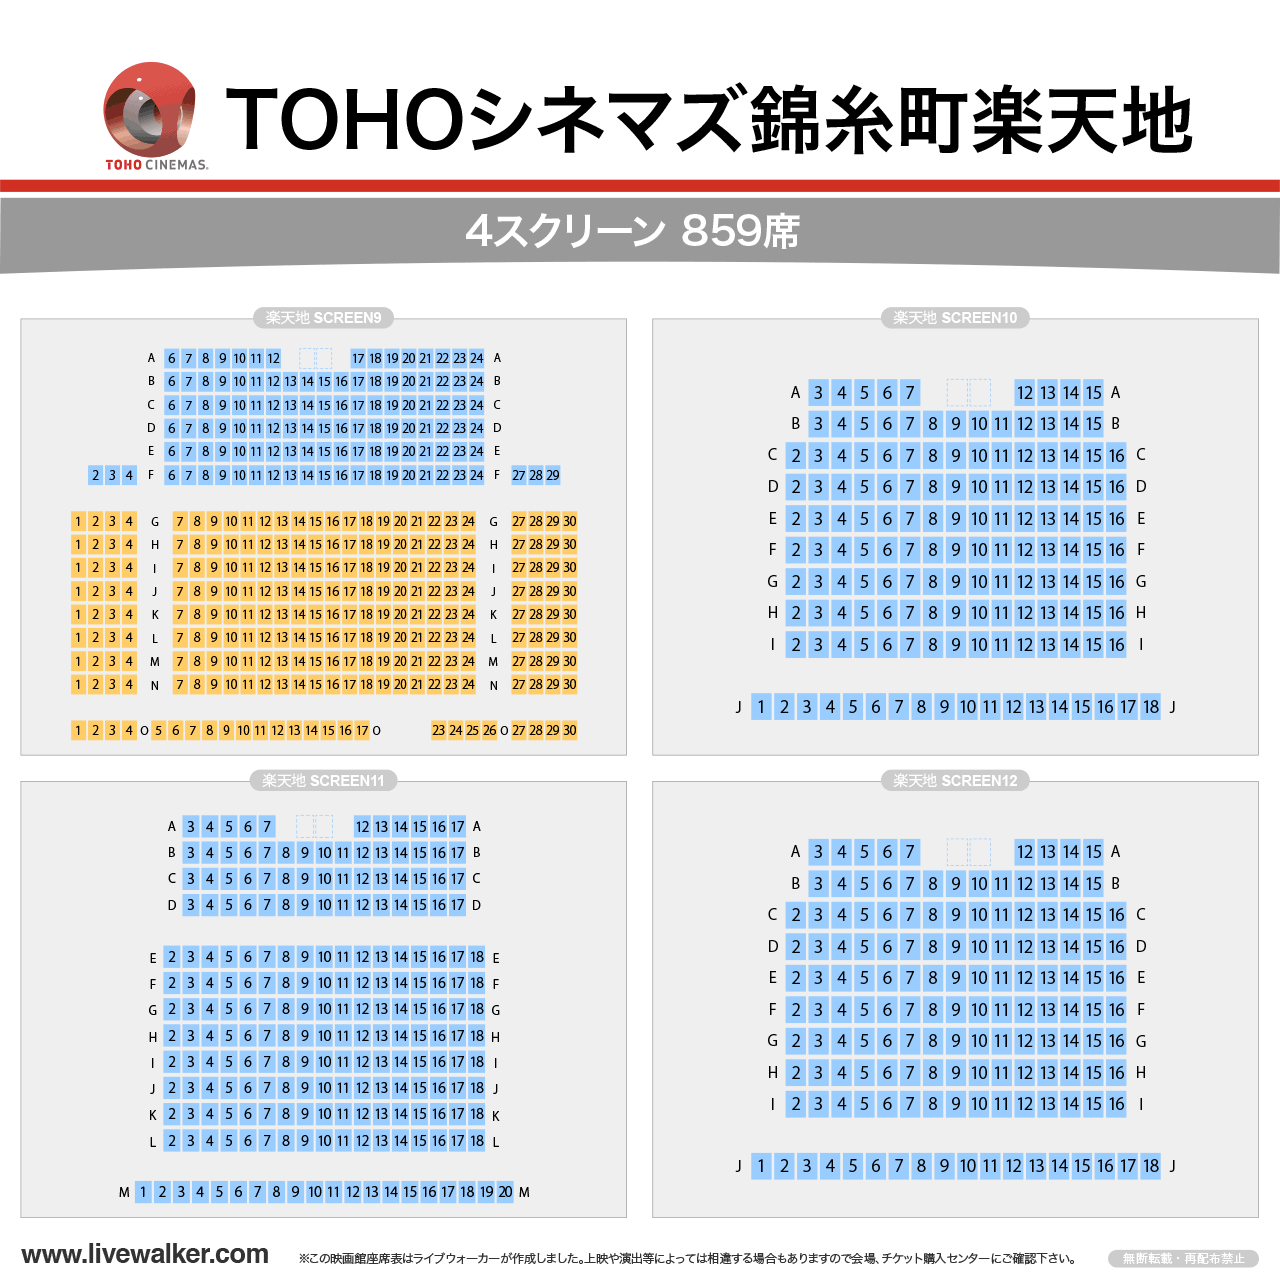 TOHOシネマズ錦糸町 楽天地スクリーンの座席表